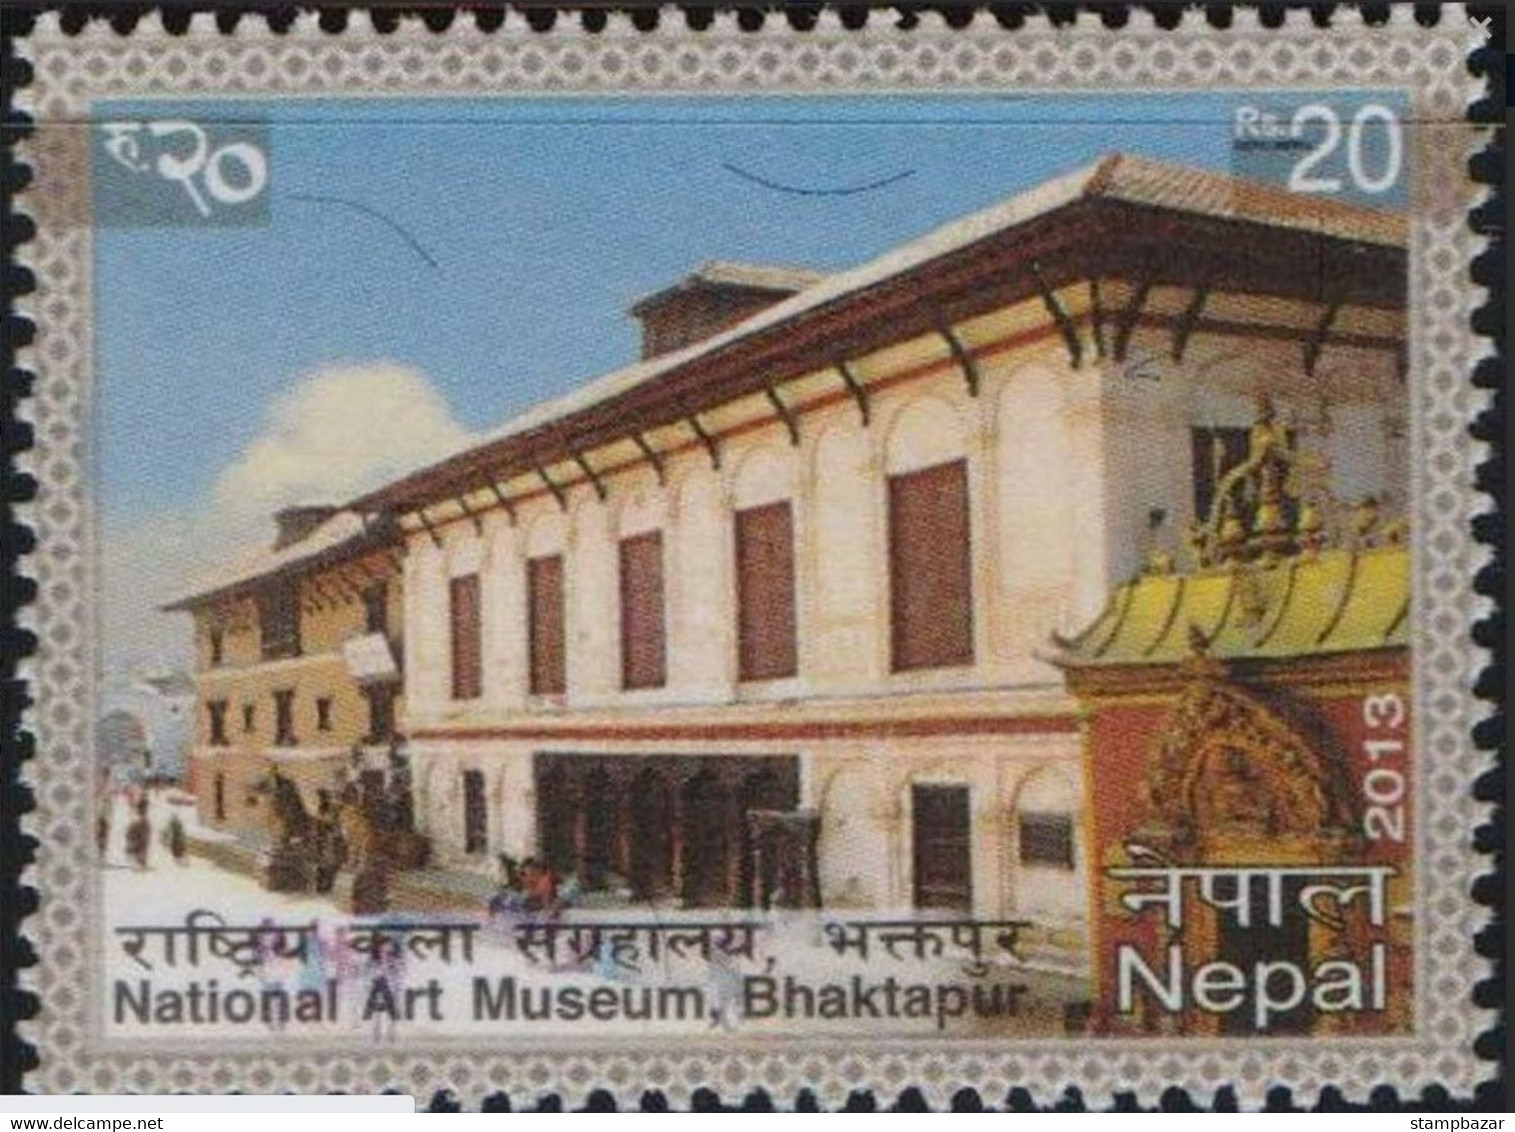 \Nepal 2013 National Art Museum Bhaktapur Stamp MNH - Népal